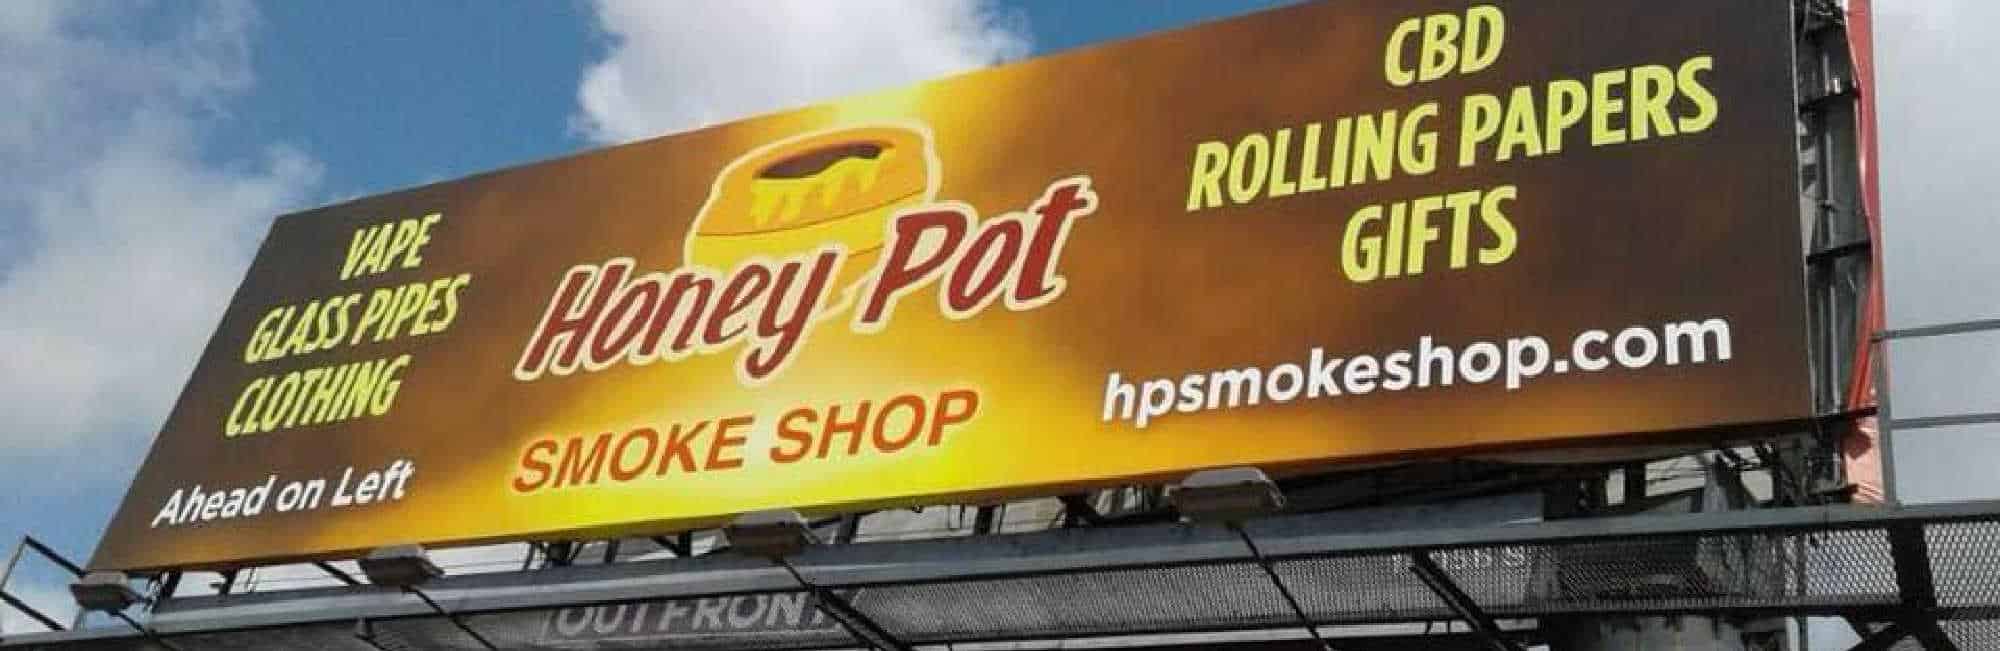 image of the honey pot smoke shop